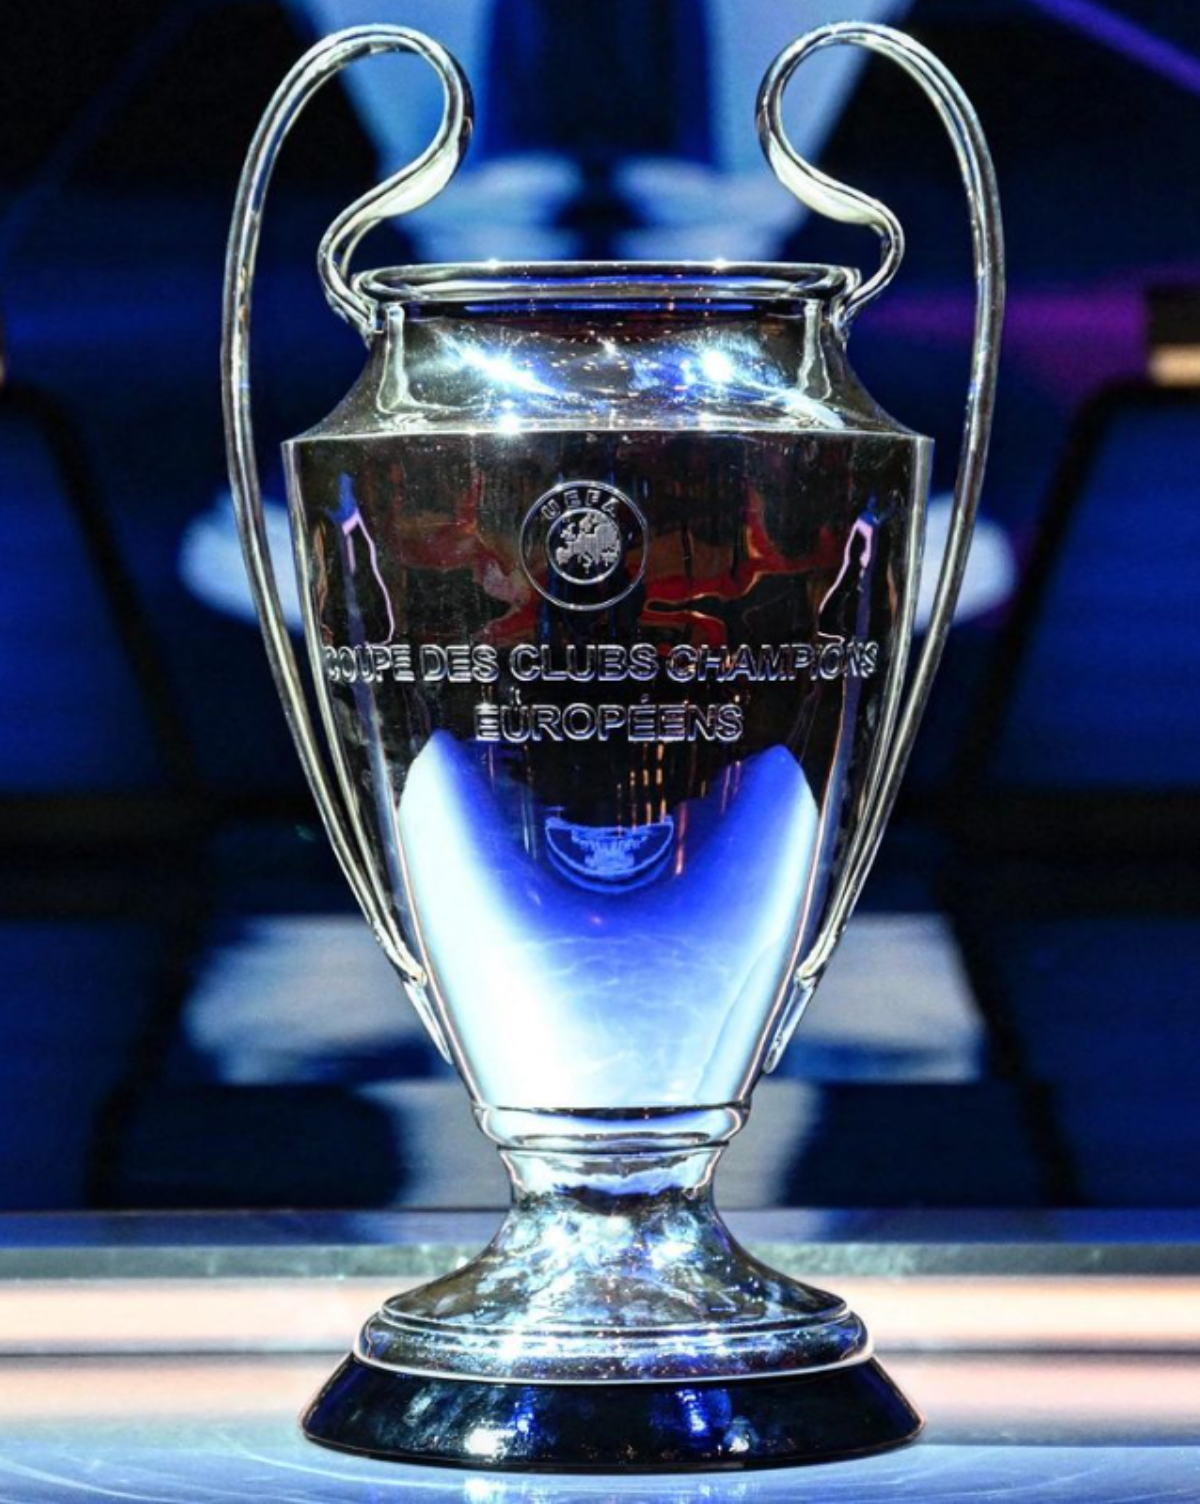 Ao vivo: assista Manchester City x Real Madrid pela Champions League - SBT  News